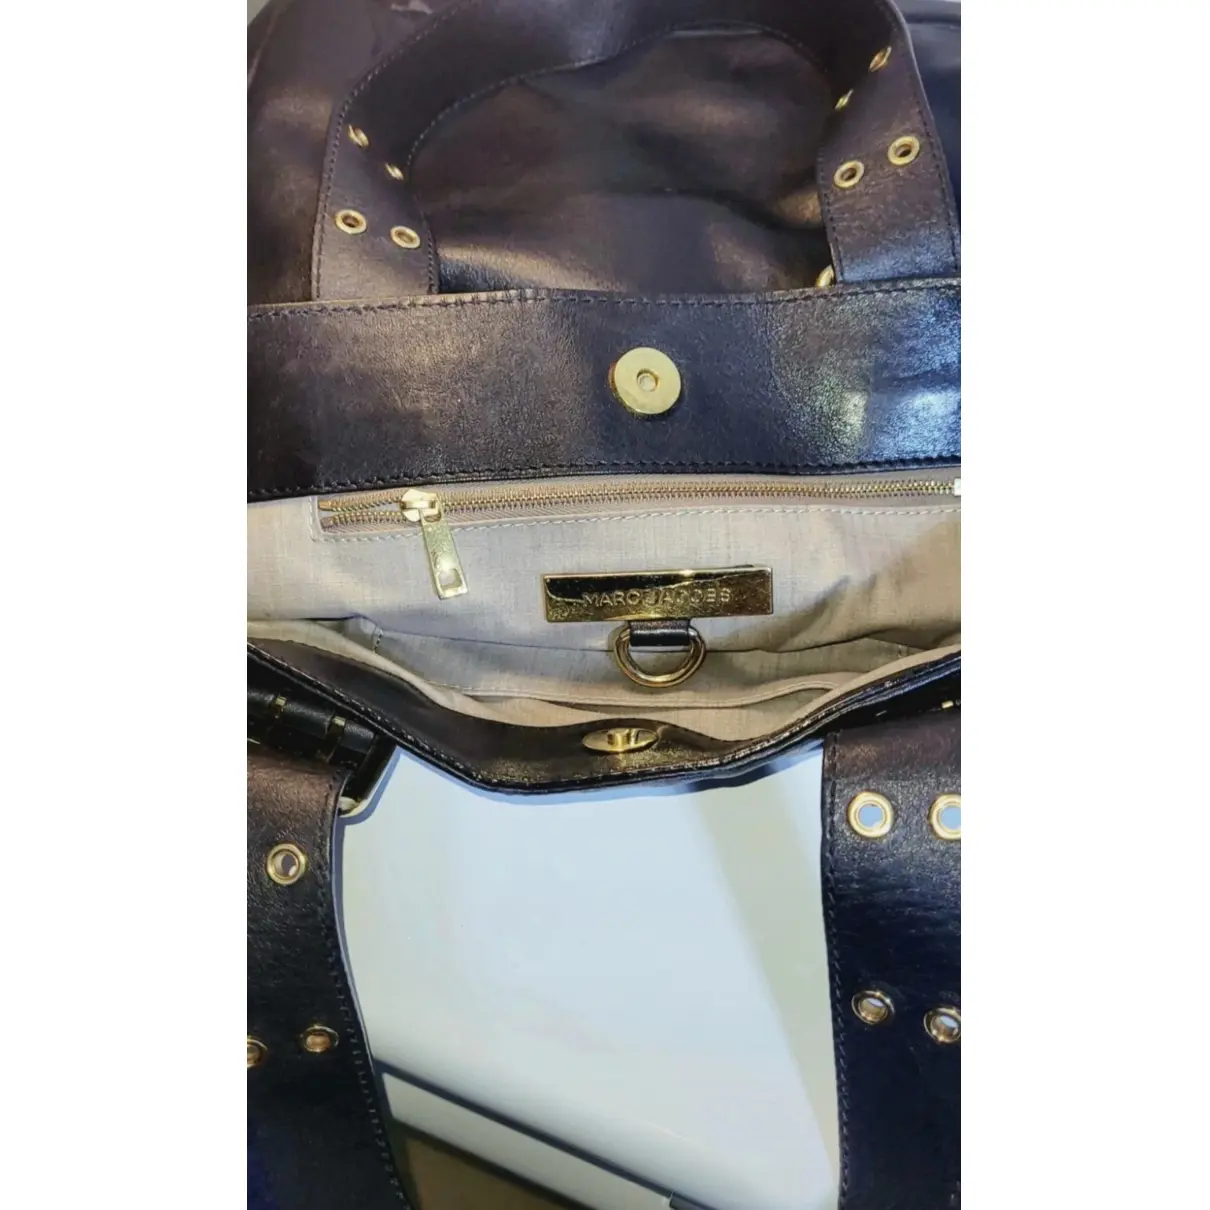 The Tag Tote leather handbag Marc Jacobs